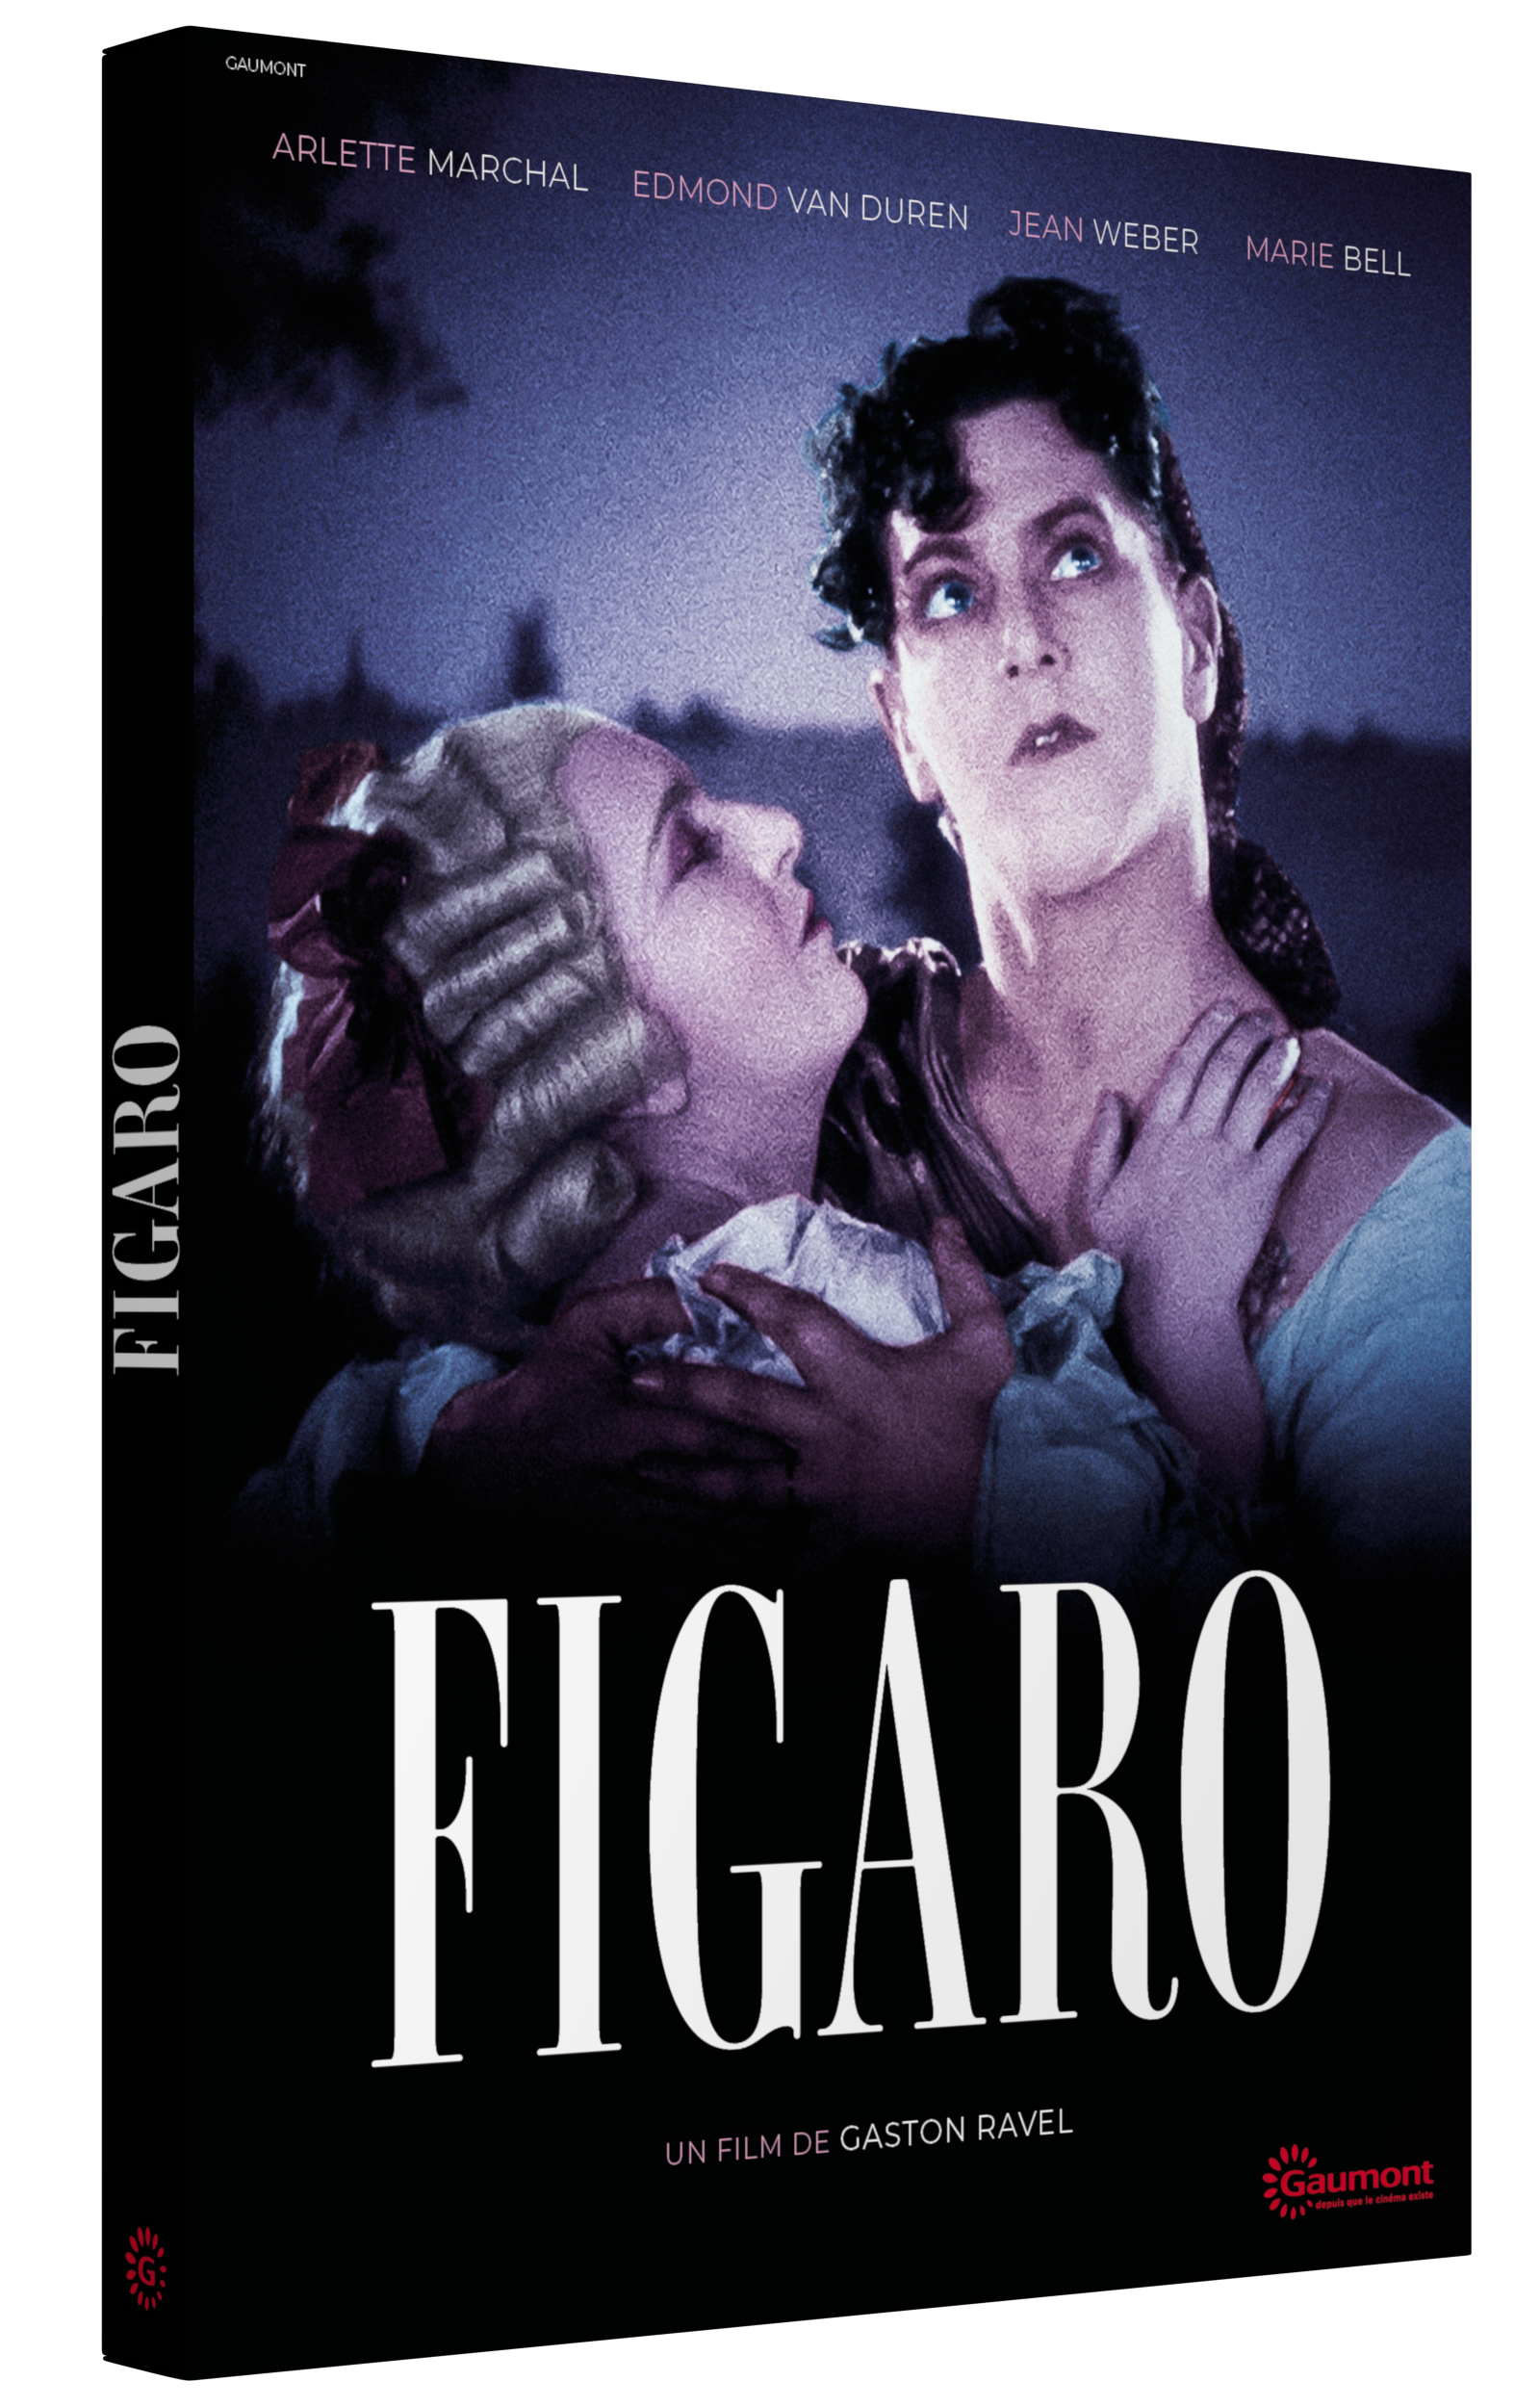 FIGARO - GC  DVD